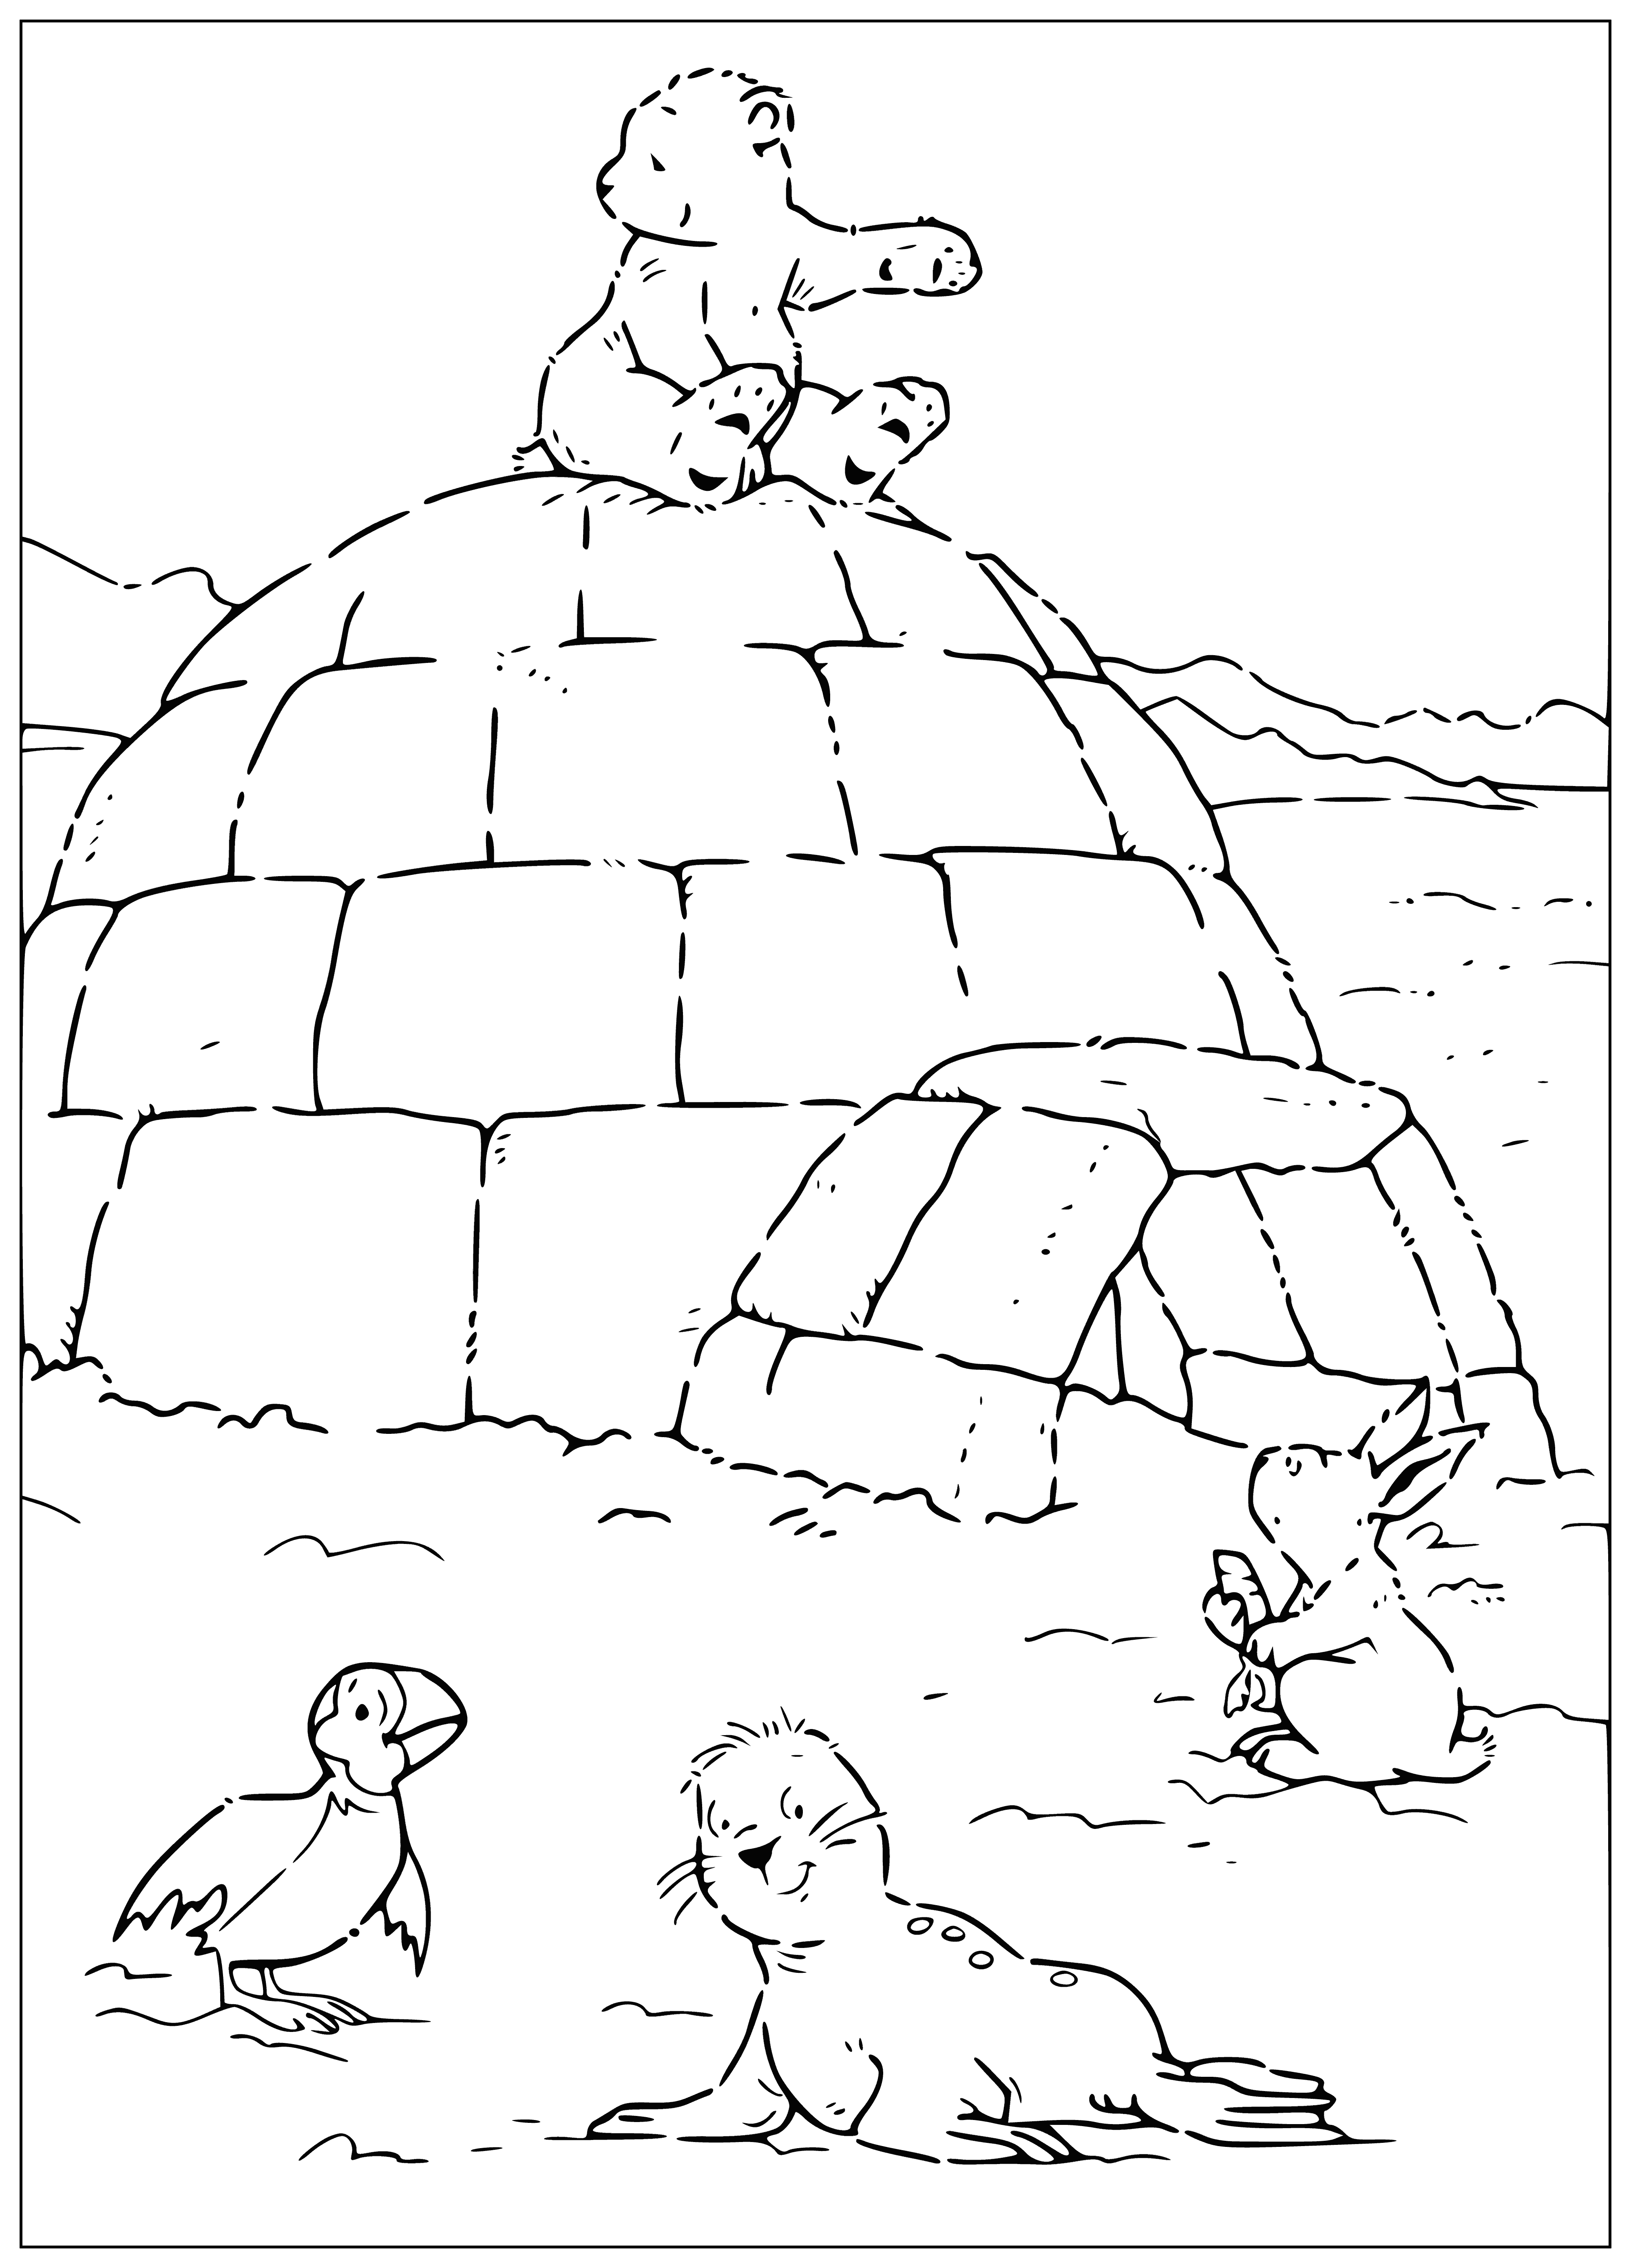 Eskimos house coloring page